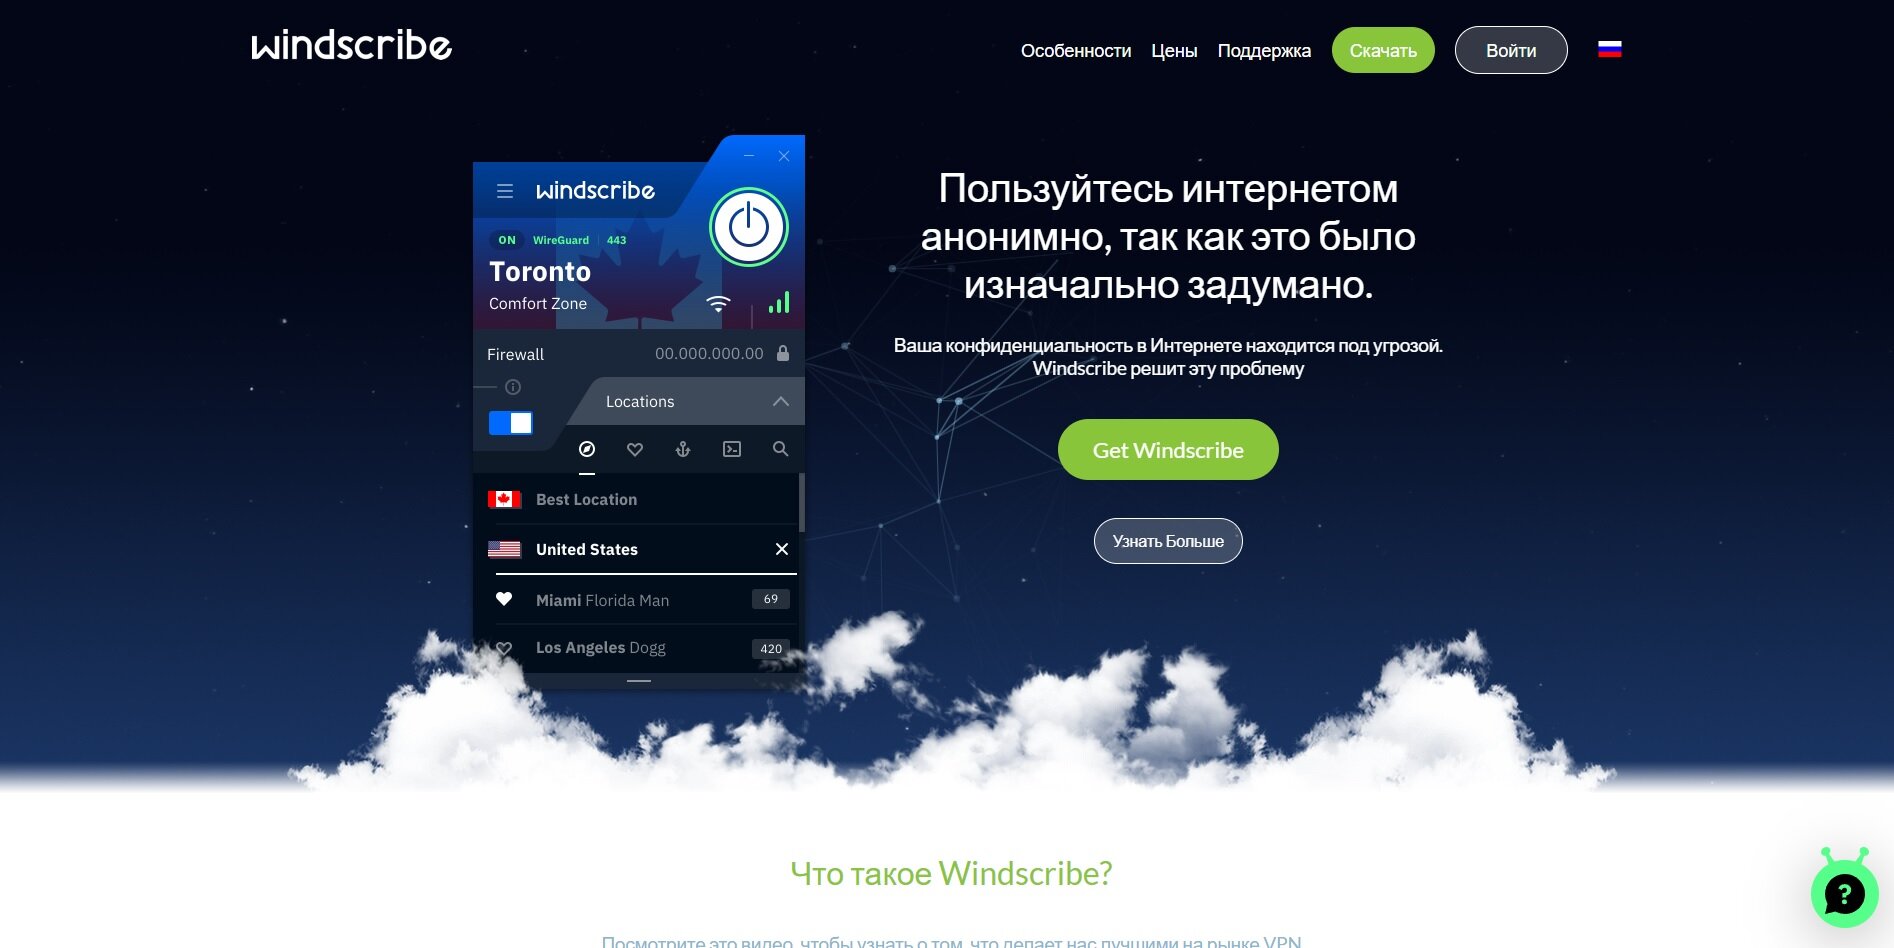 Windscribe.com – Обзор и отзывы о VPN-сервисе